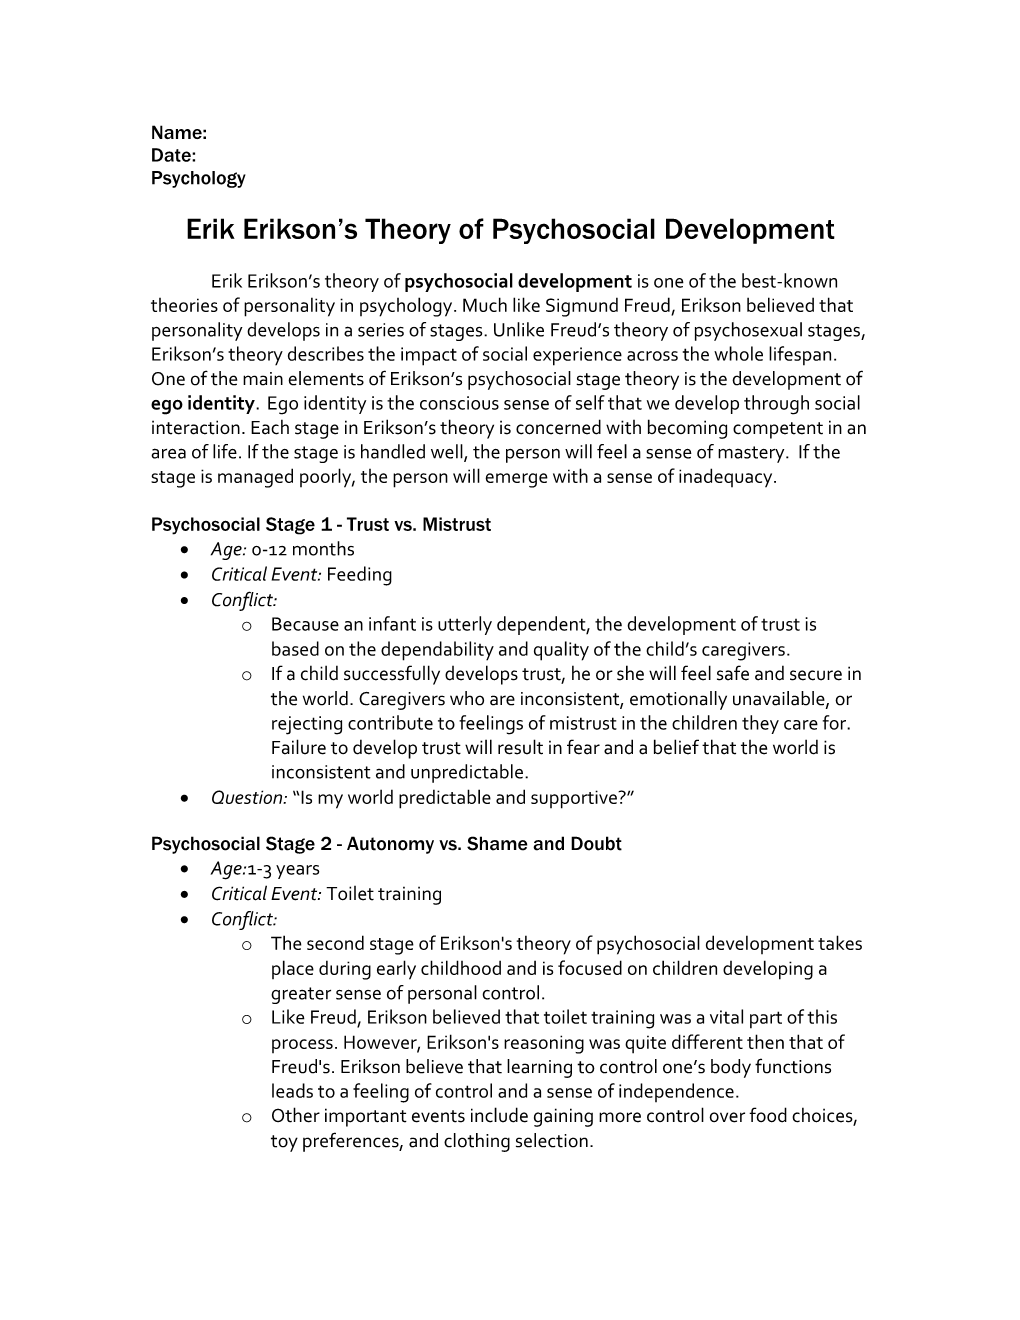 Erik Erikson S Theory of Psychosocial Development